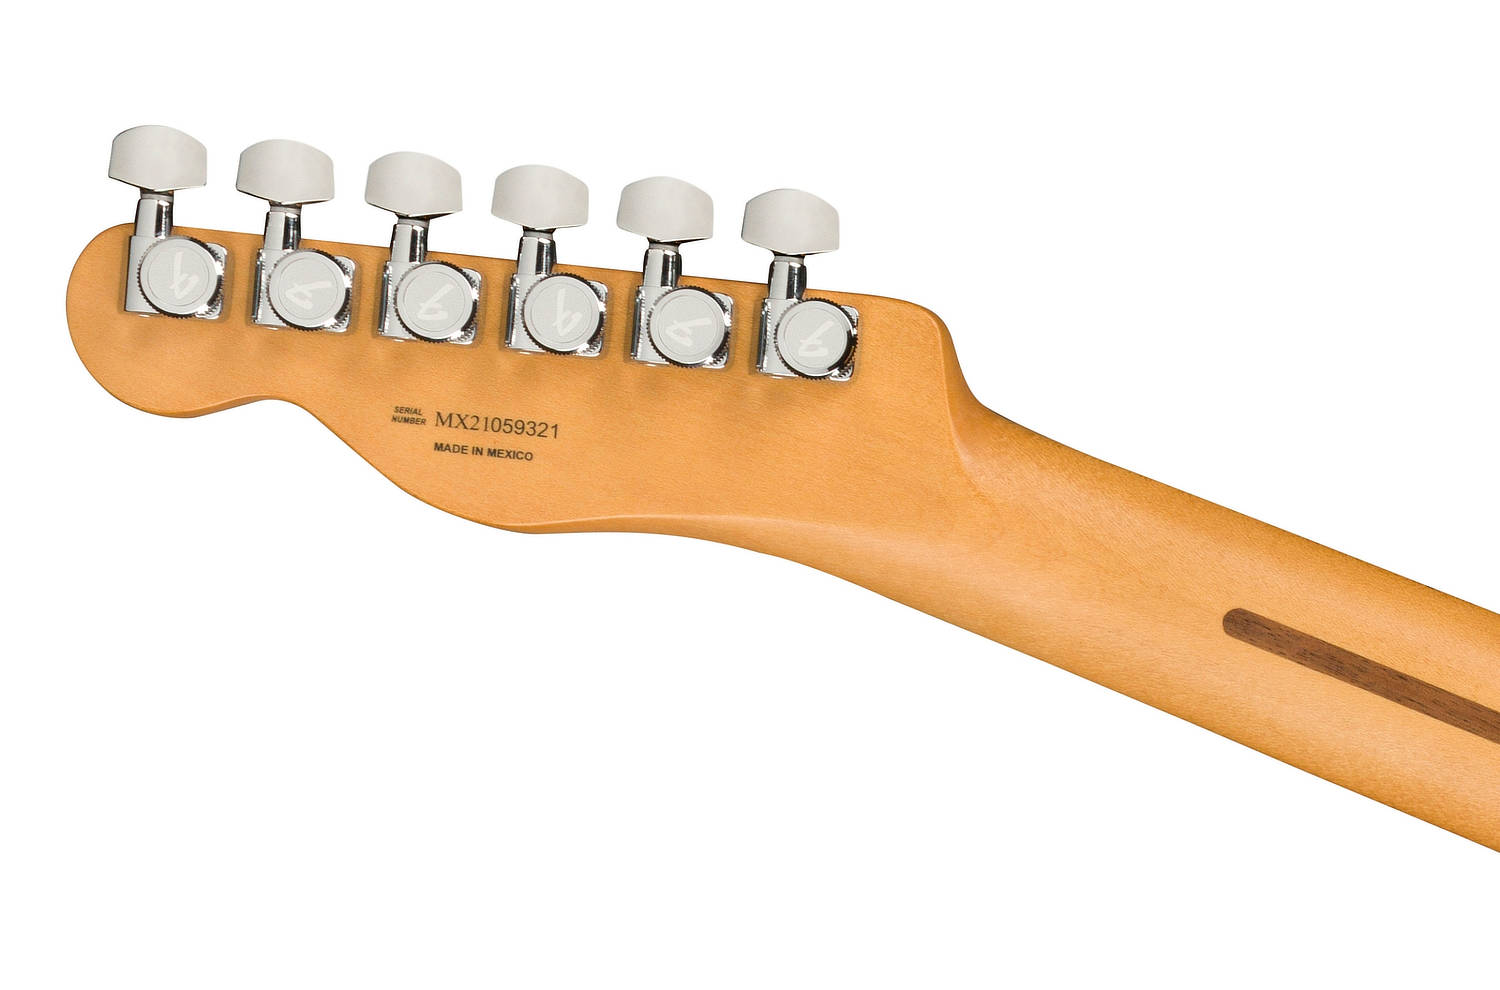 Fender Player Plus Nashville Telecaster Electric Guitar